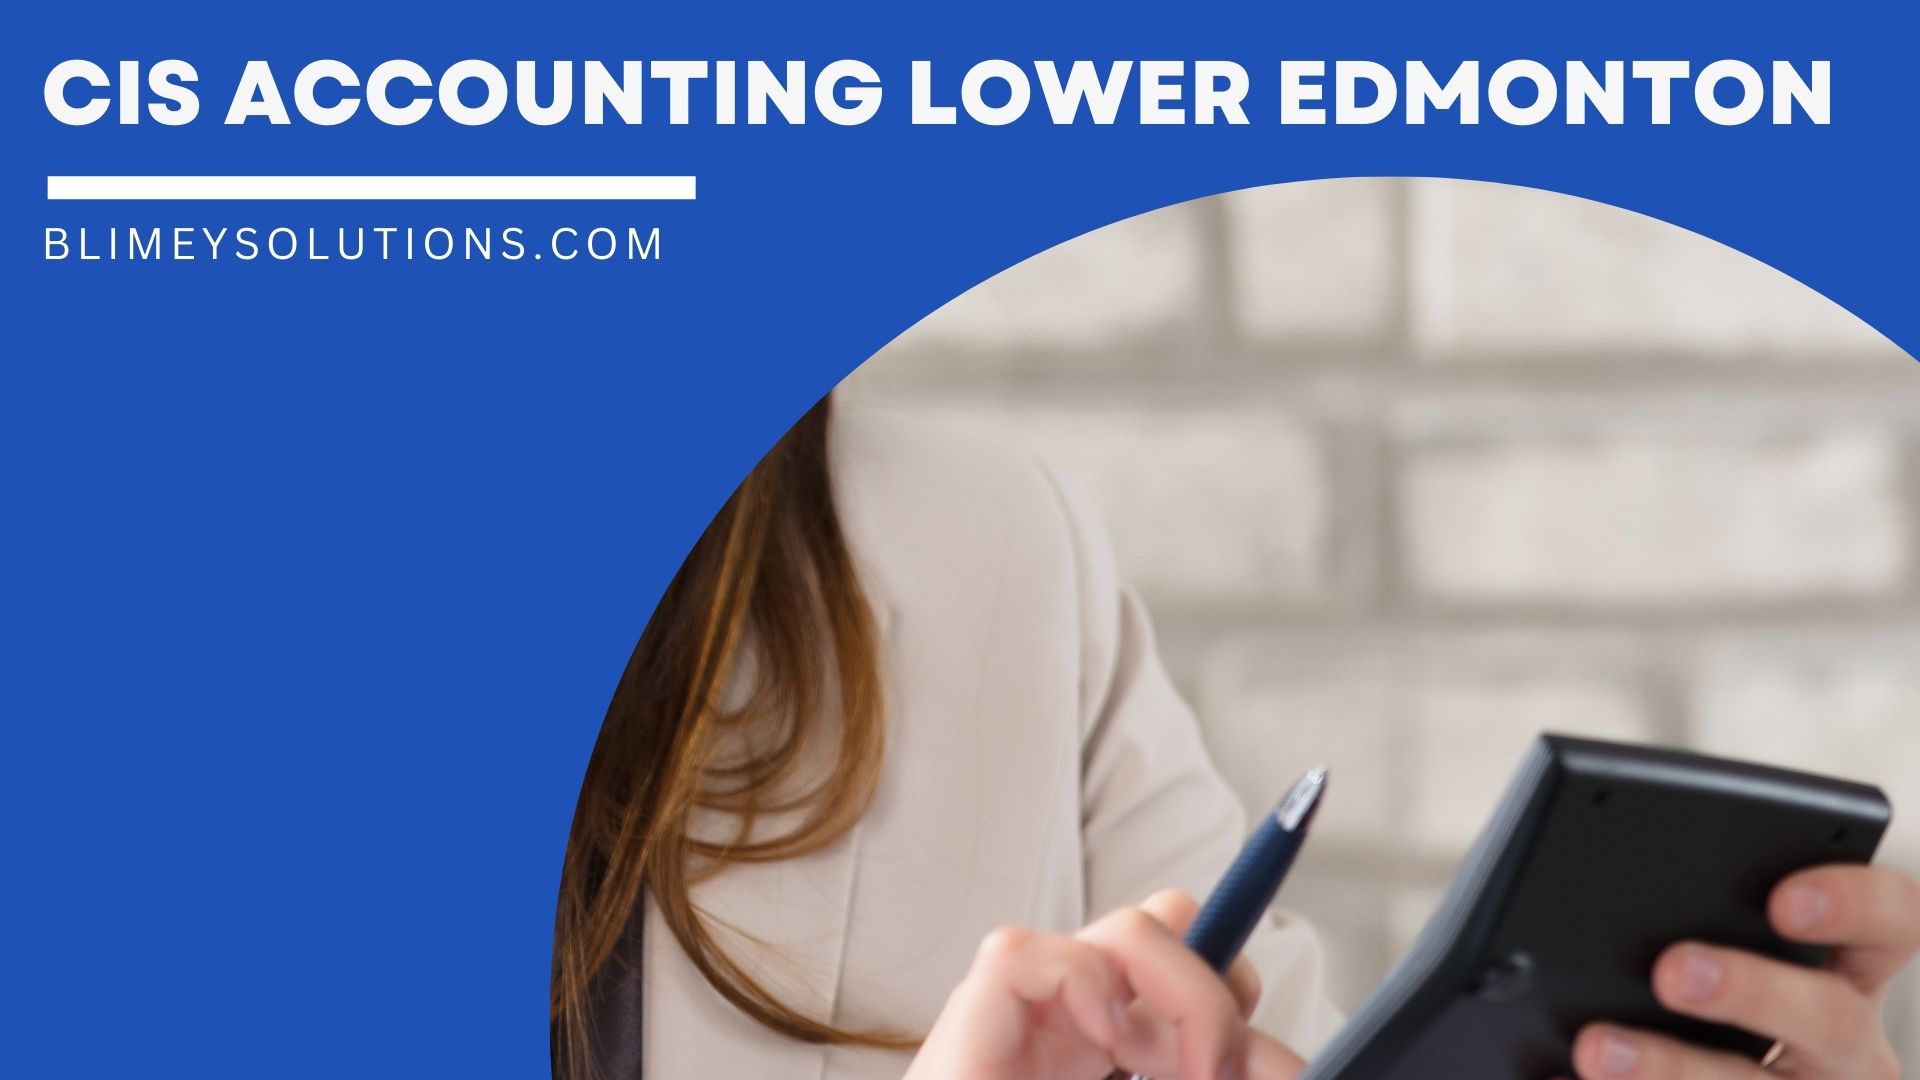 CIS Accounting in Lower Edmonton N9 London